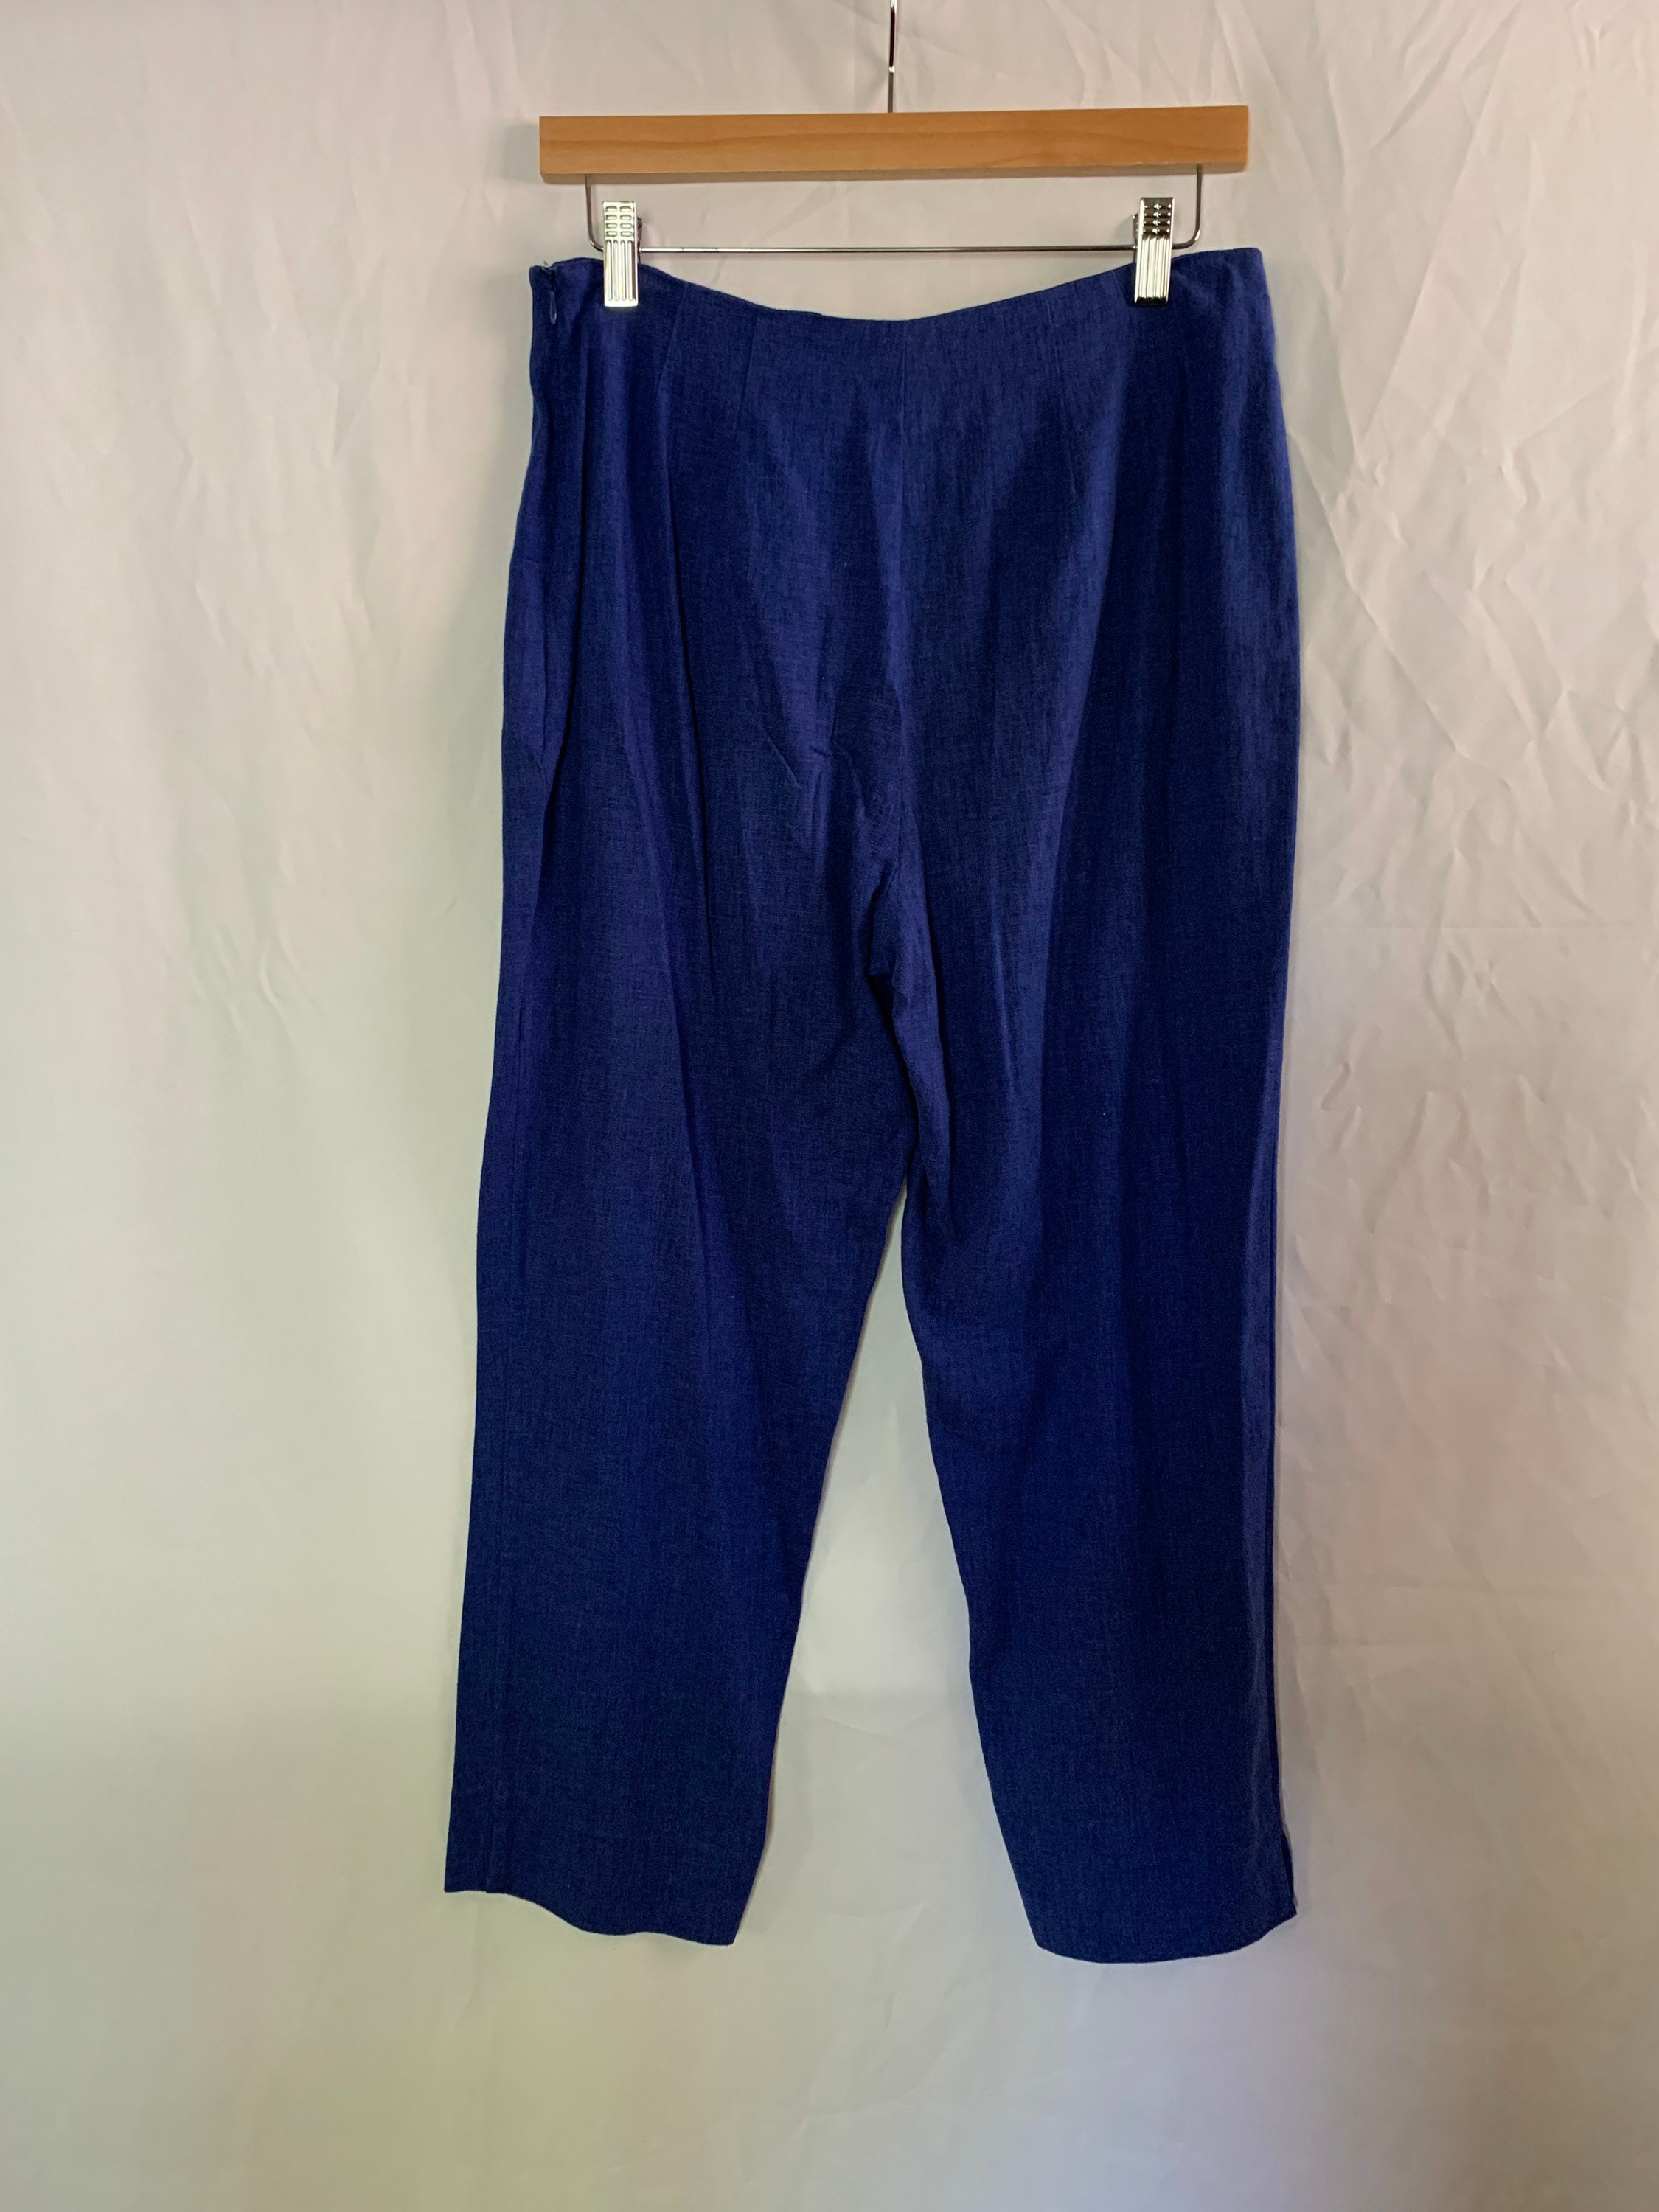 Vintage Royal Blue Linen Pants | Etsy